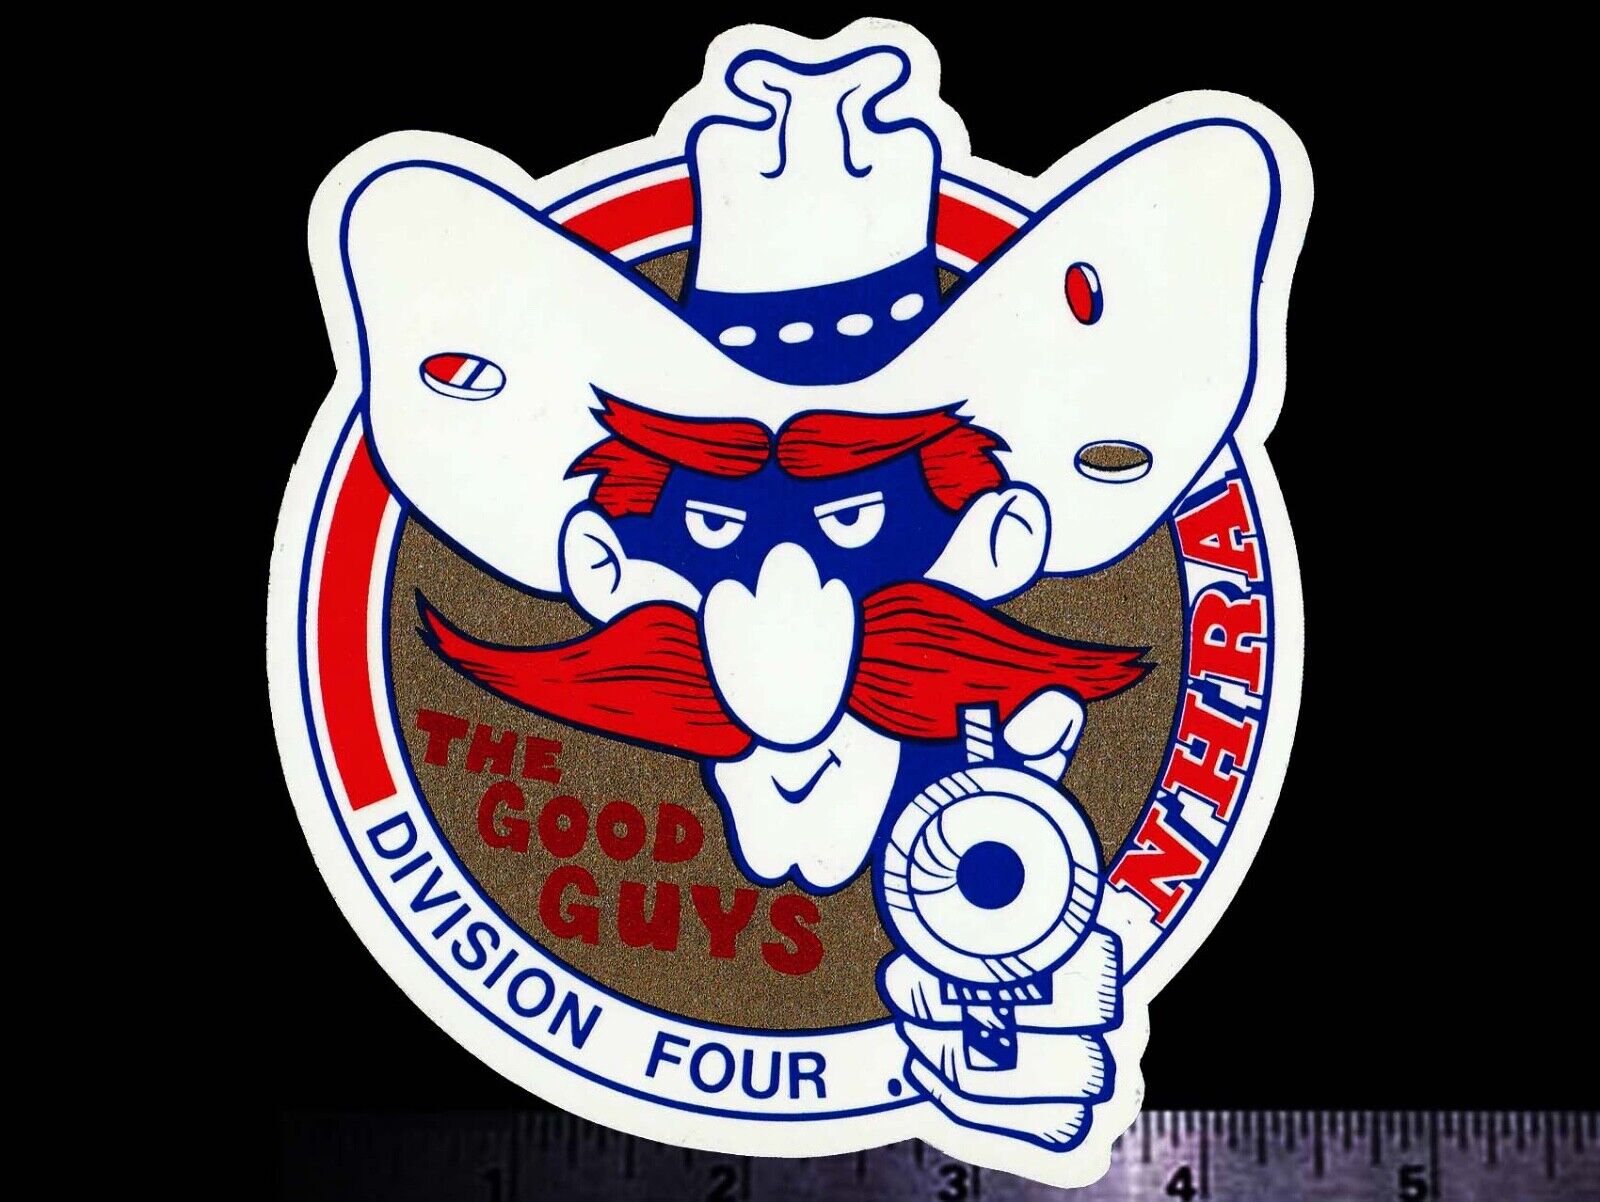 NHRA The Good Guys Division Four - Original Vintage Racing Decal/Sticker